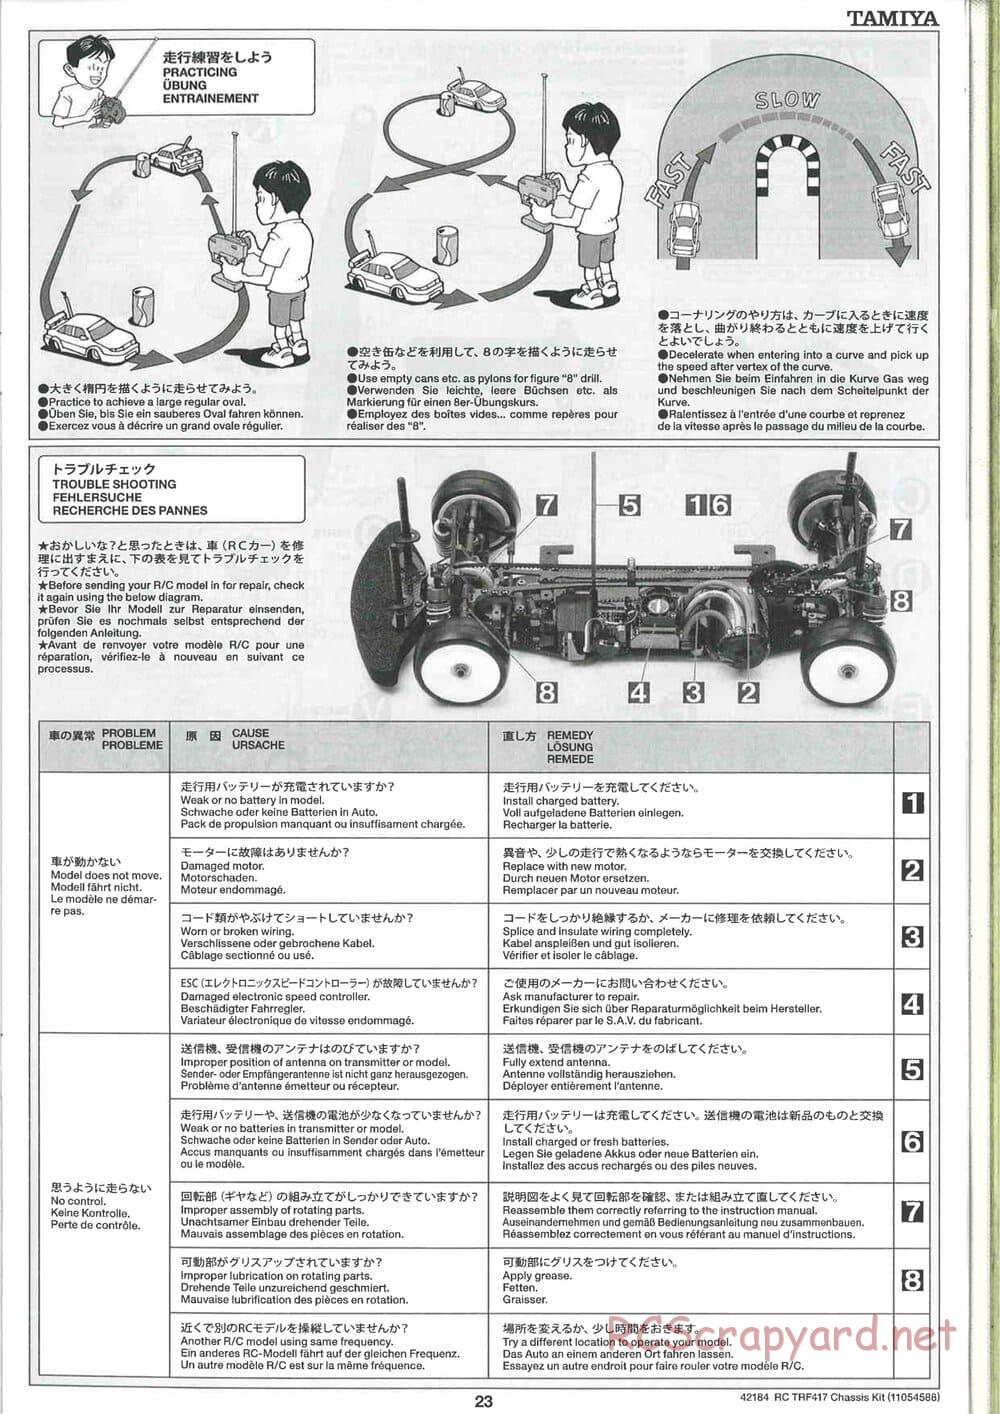 Tamiya - TRF417 Chassis - Manual - Page 23